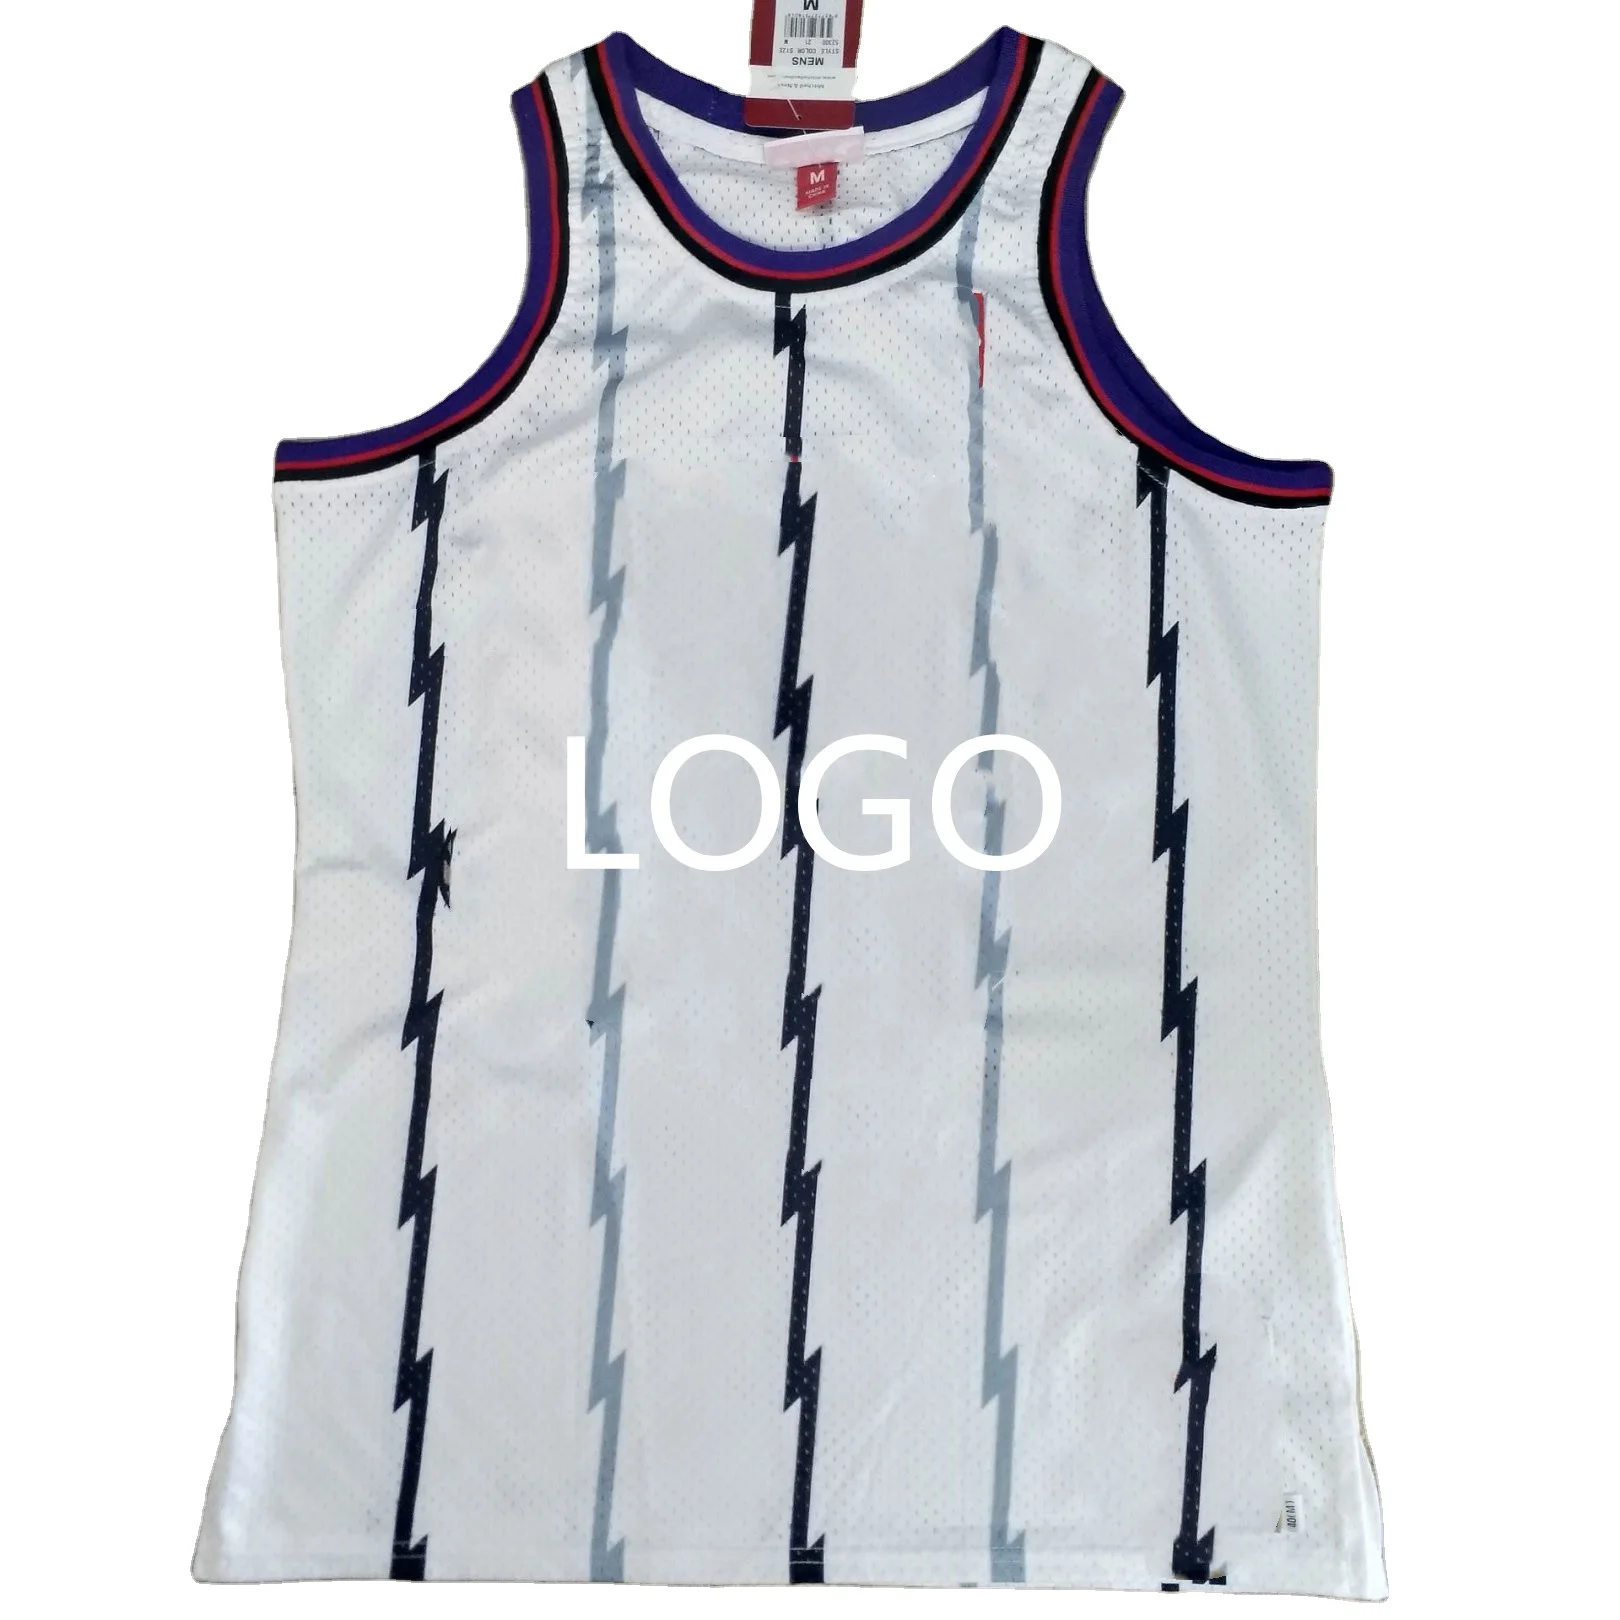 Gleesports Wholesale Basketball jersey,5 Pieces